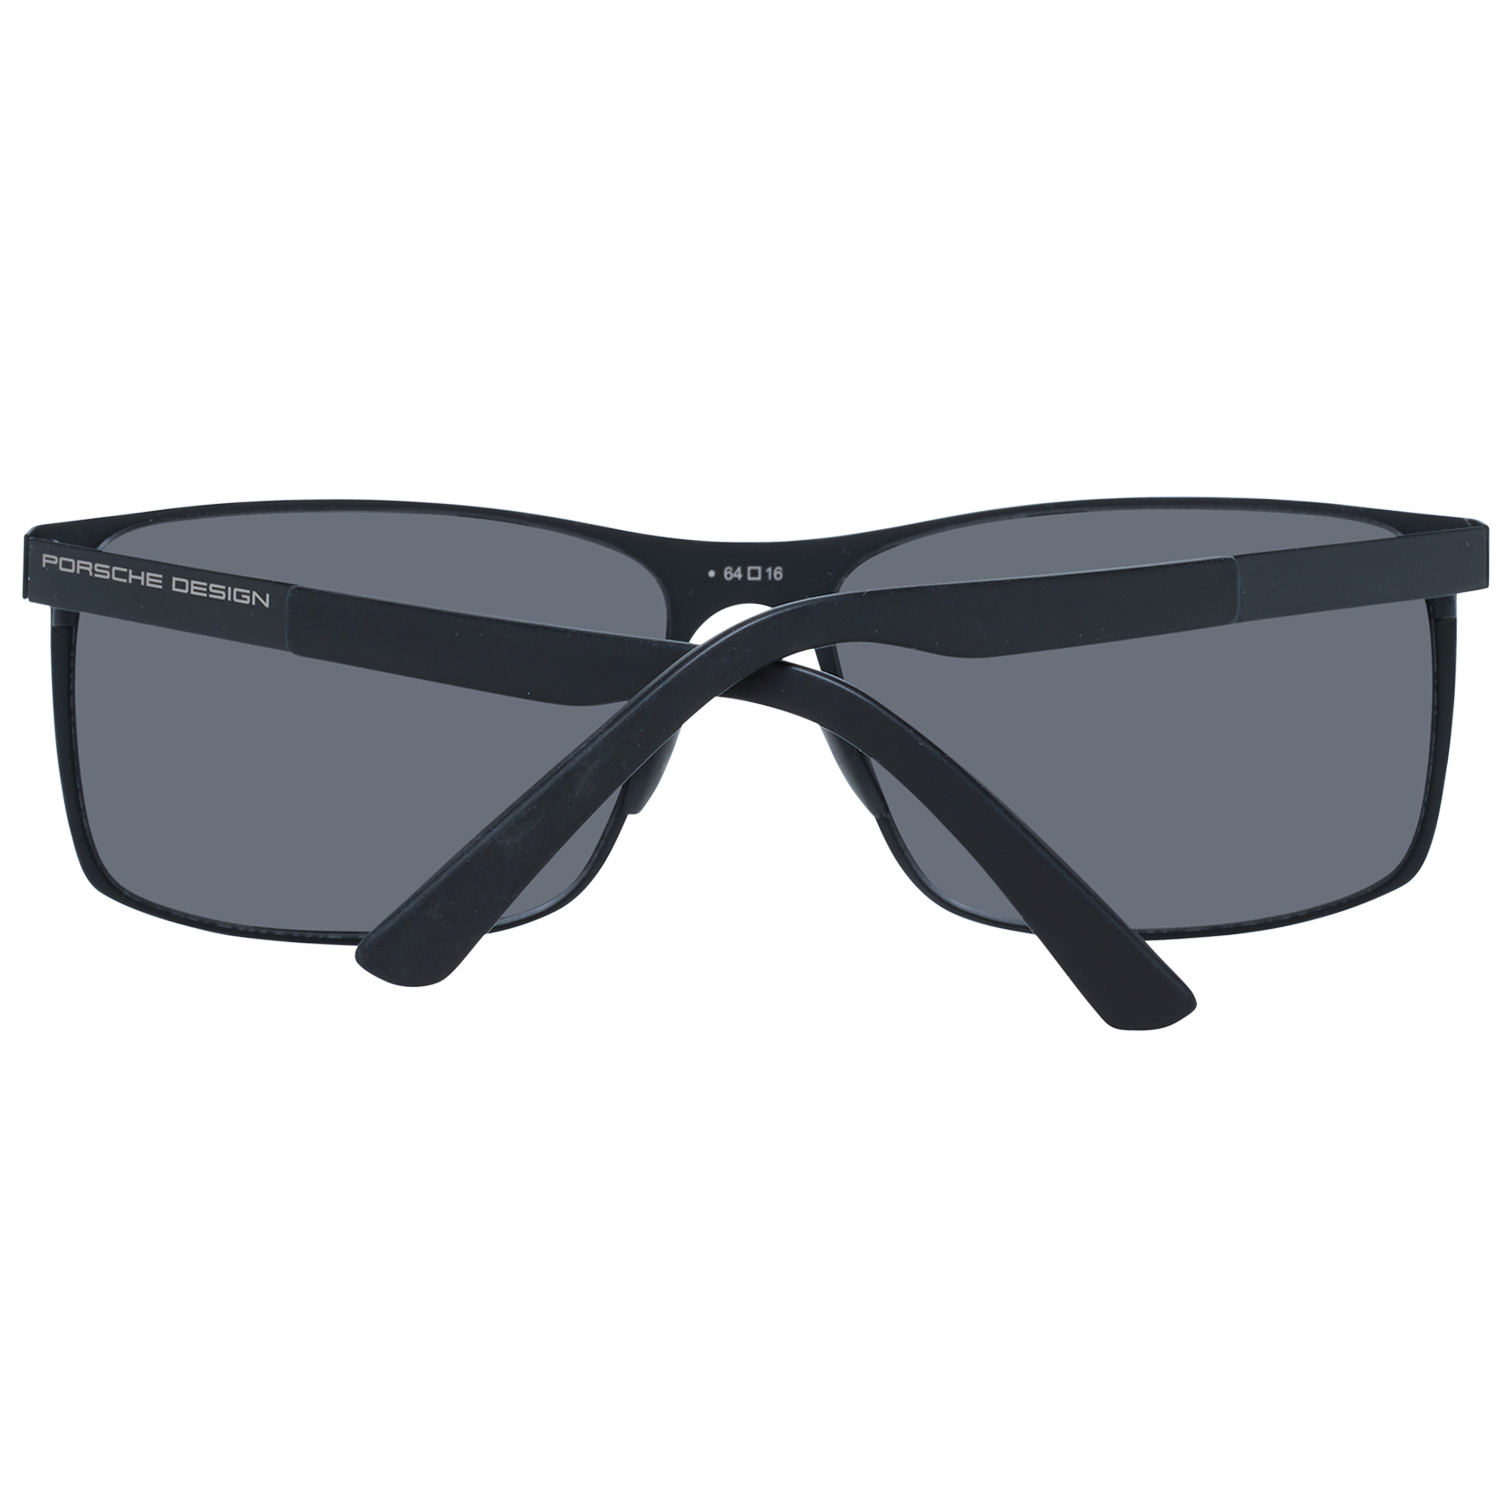 Porsche Design Sunglasses Porsche Design Sunglasses P8566 F 64 Eyeglasses Eyewear UK USA Australia 